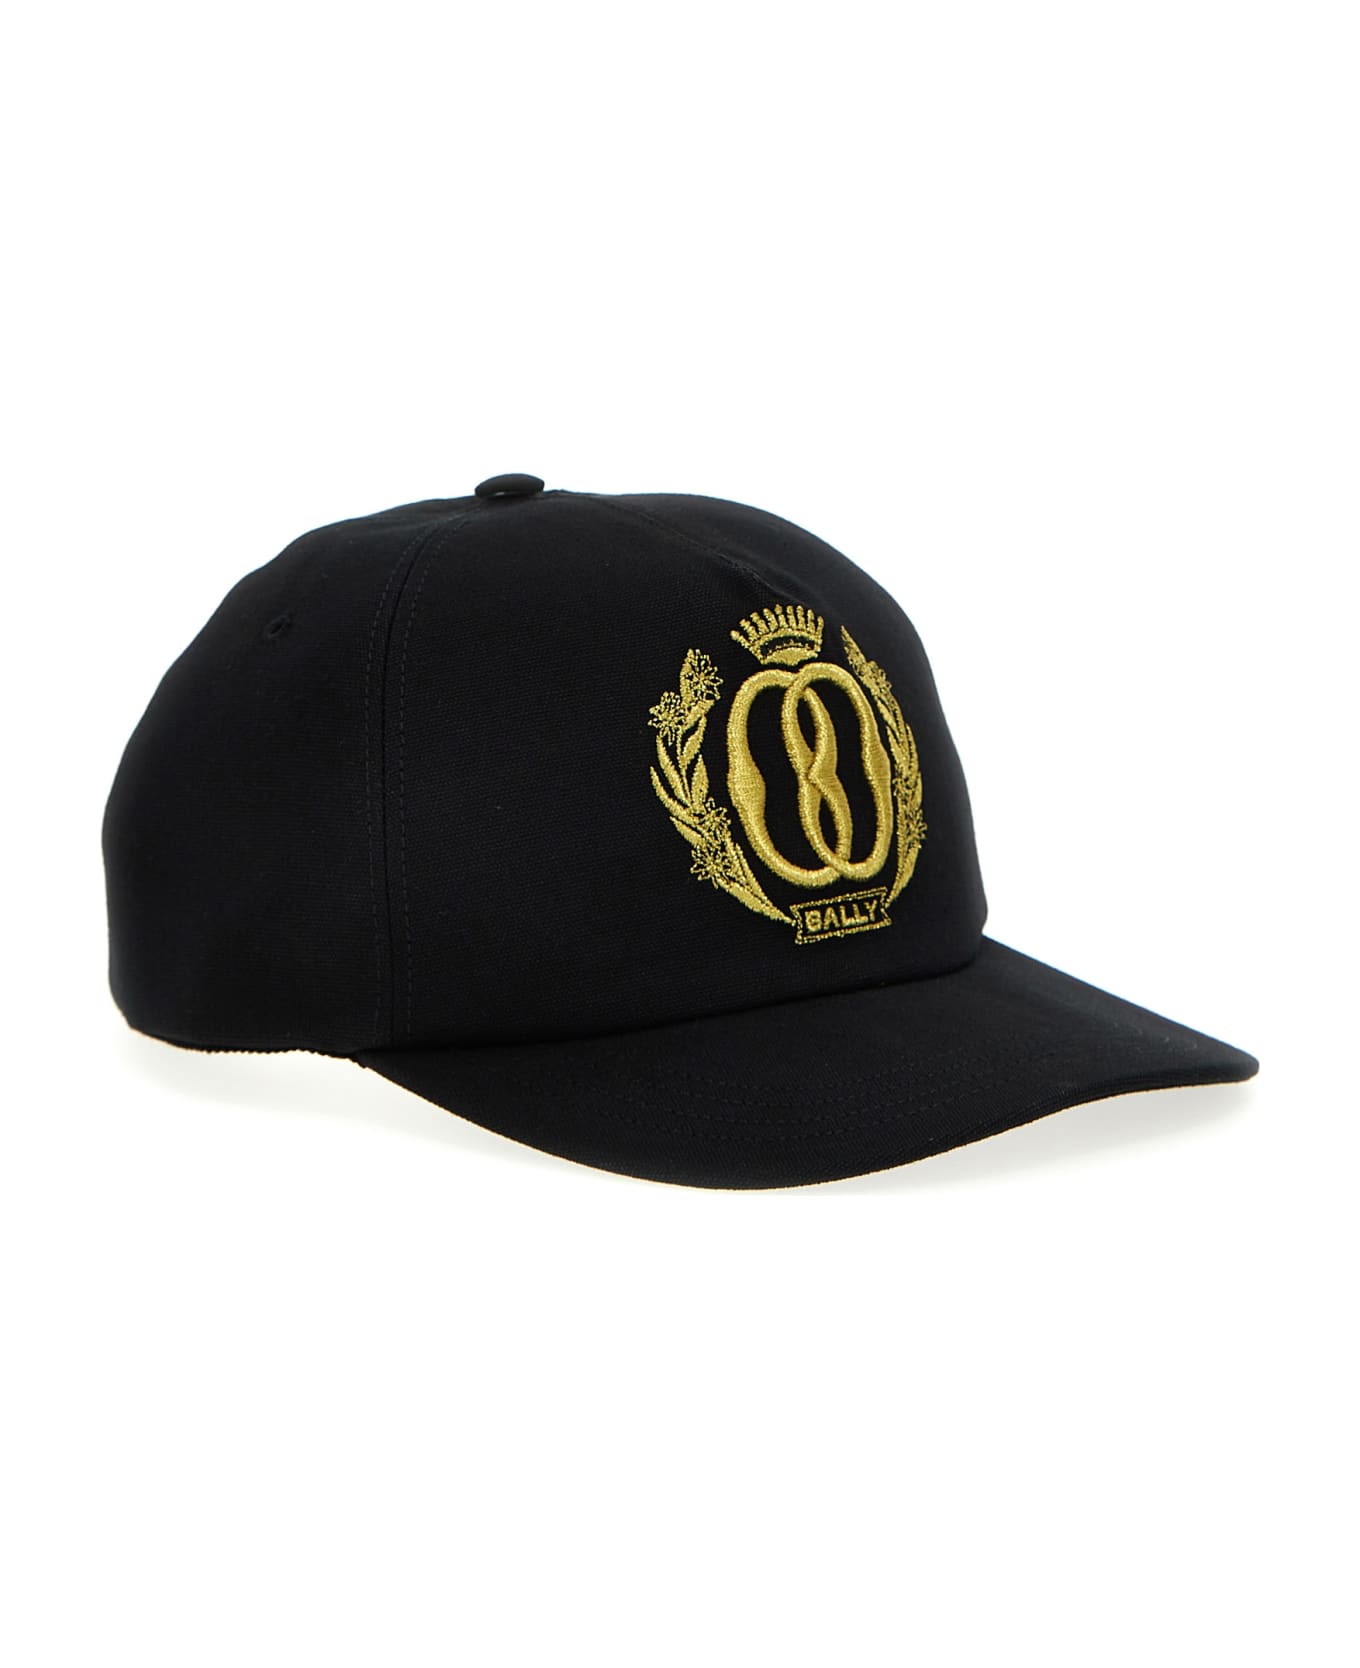 Bally Embroidered Logo Hat - Black   帽子